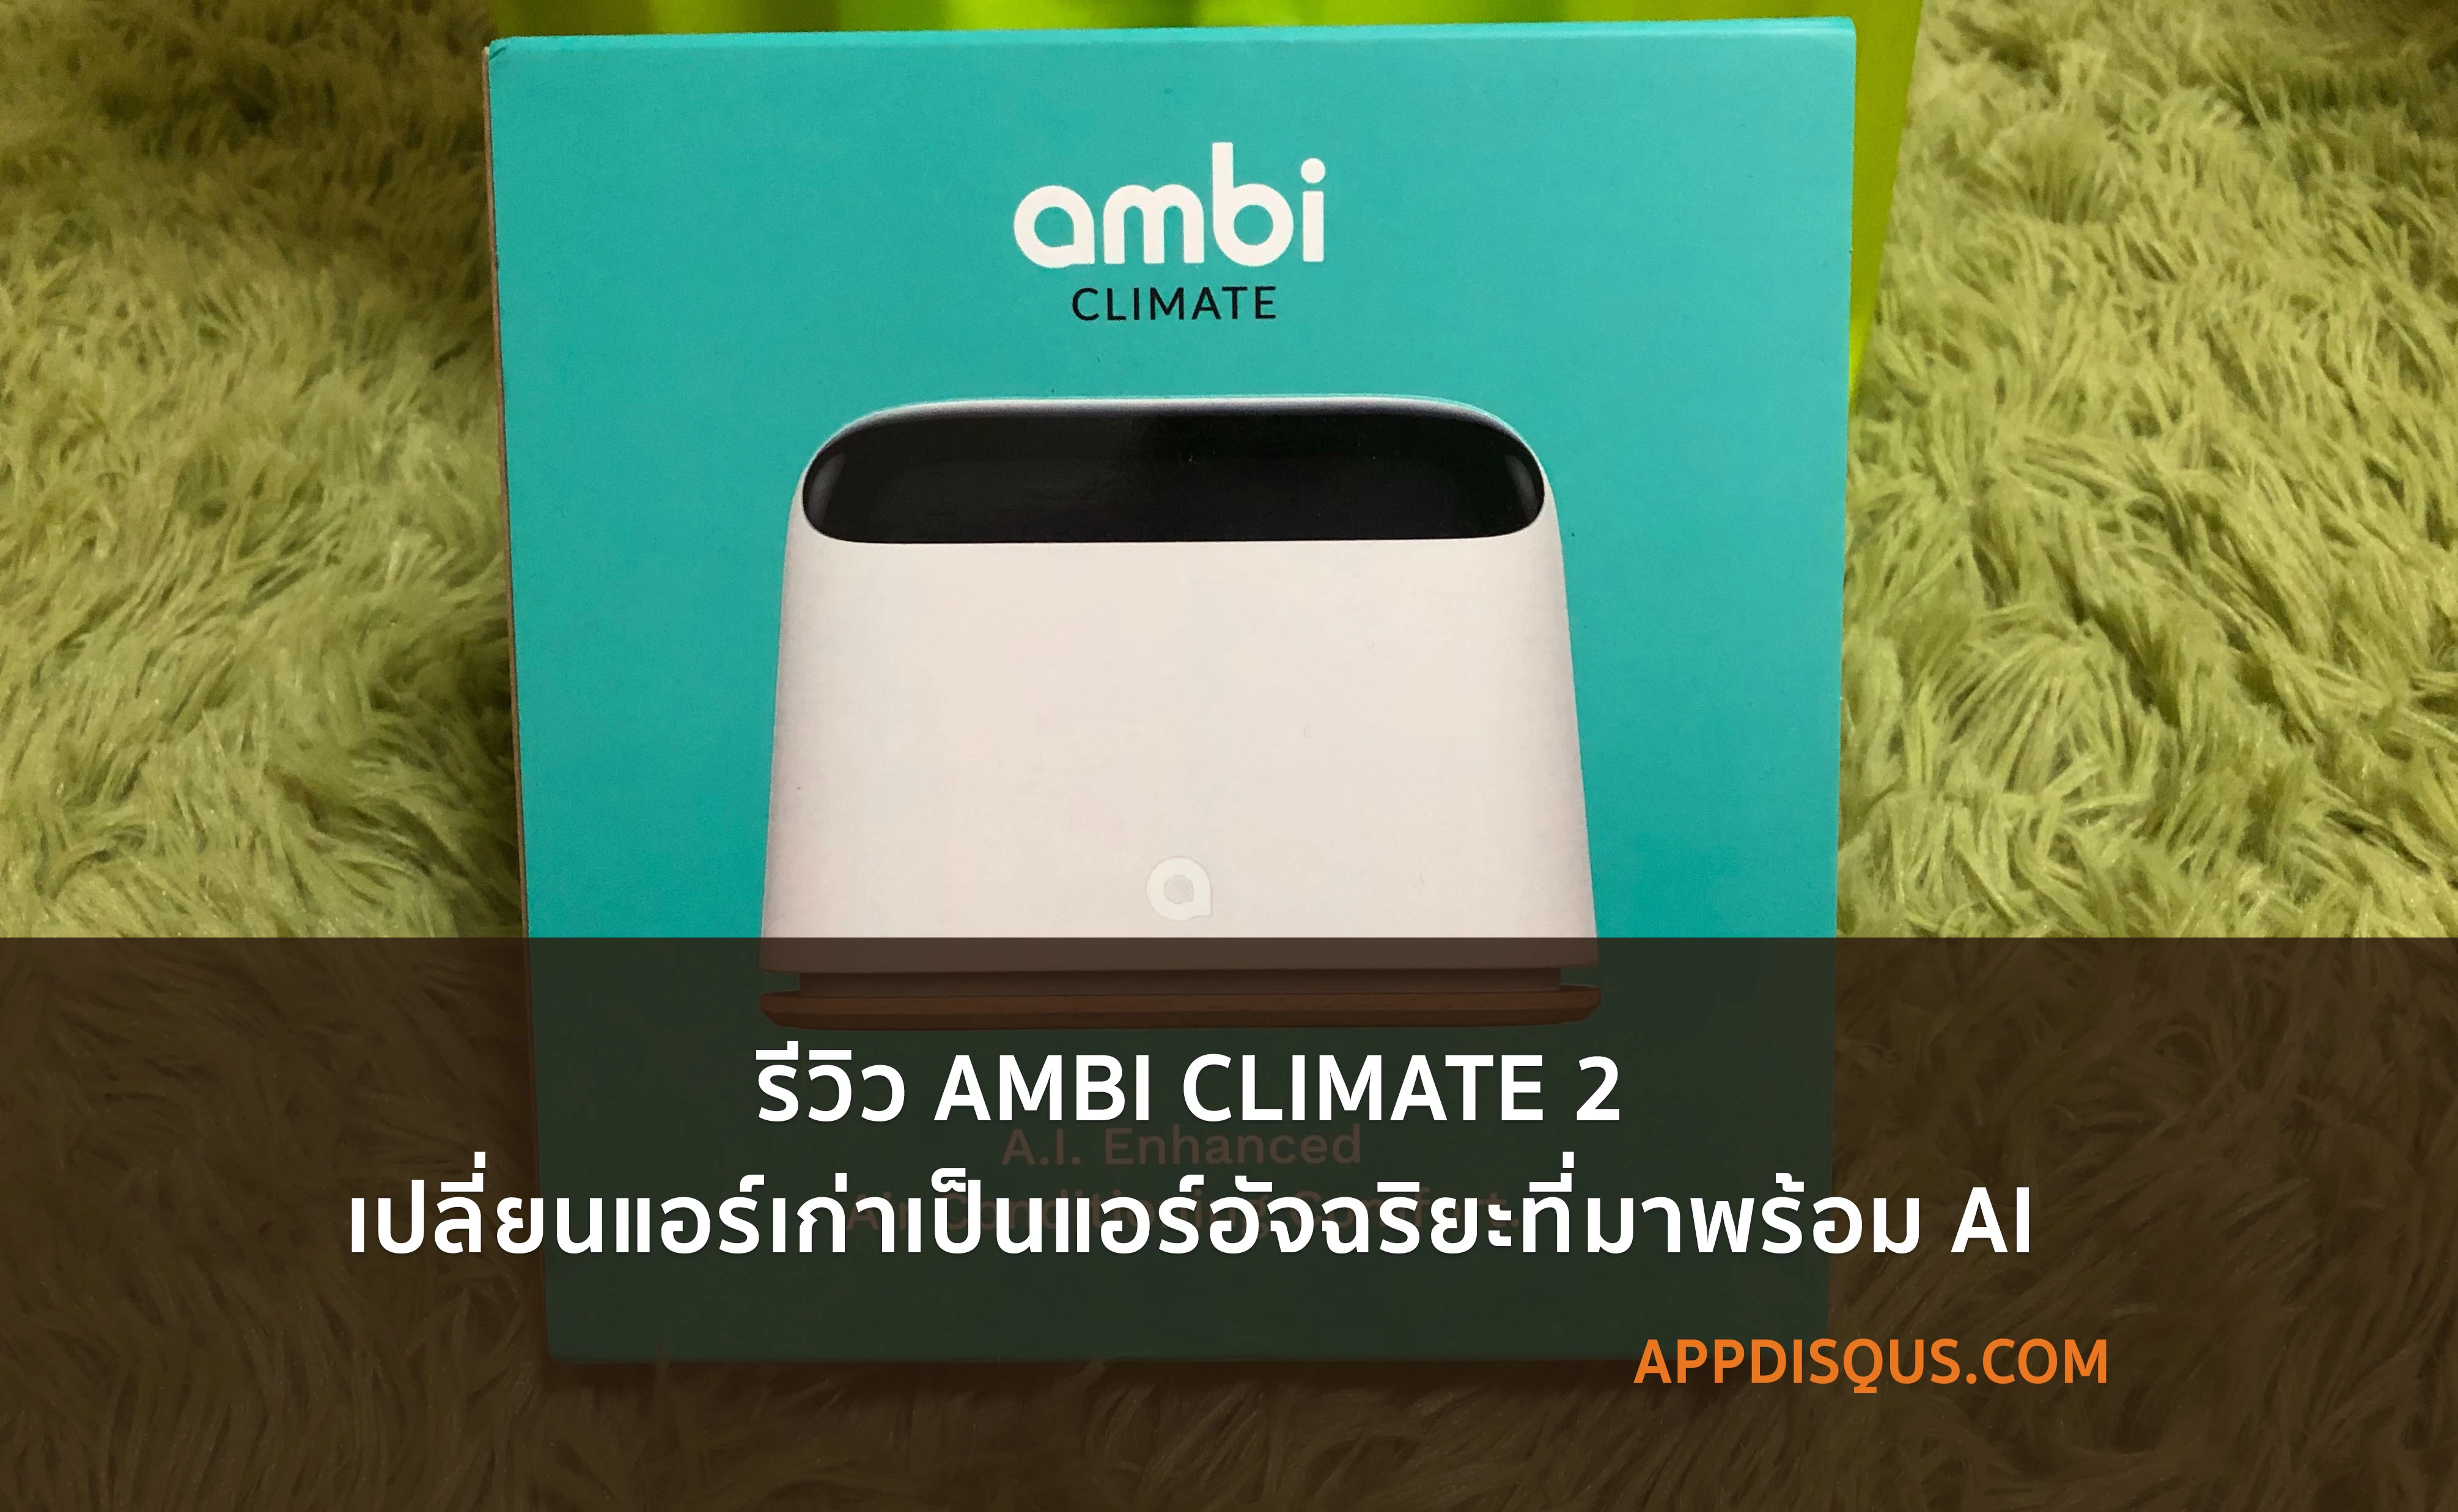 ambi climate 2 review cover | HomeKit | รีวิว Ambi Climate 2 มาเปลี่ยนแอร์แก่ๆ ให้กลายเป็นแอร์อัจฉริยะมี AI กัน